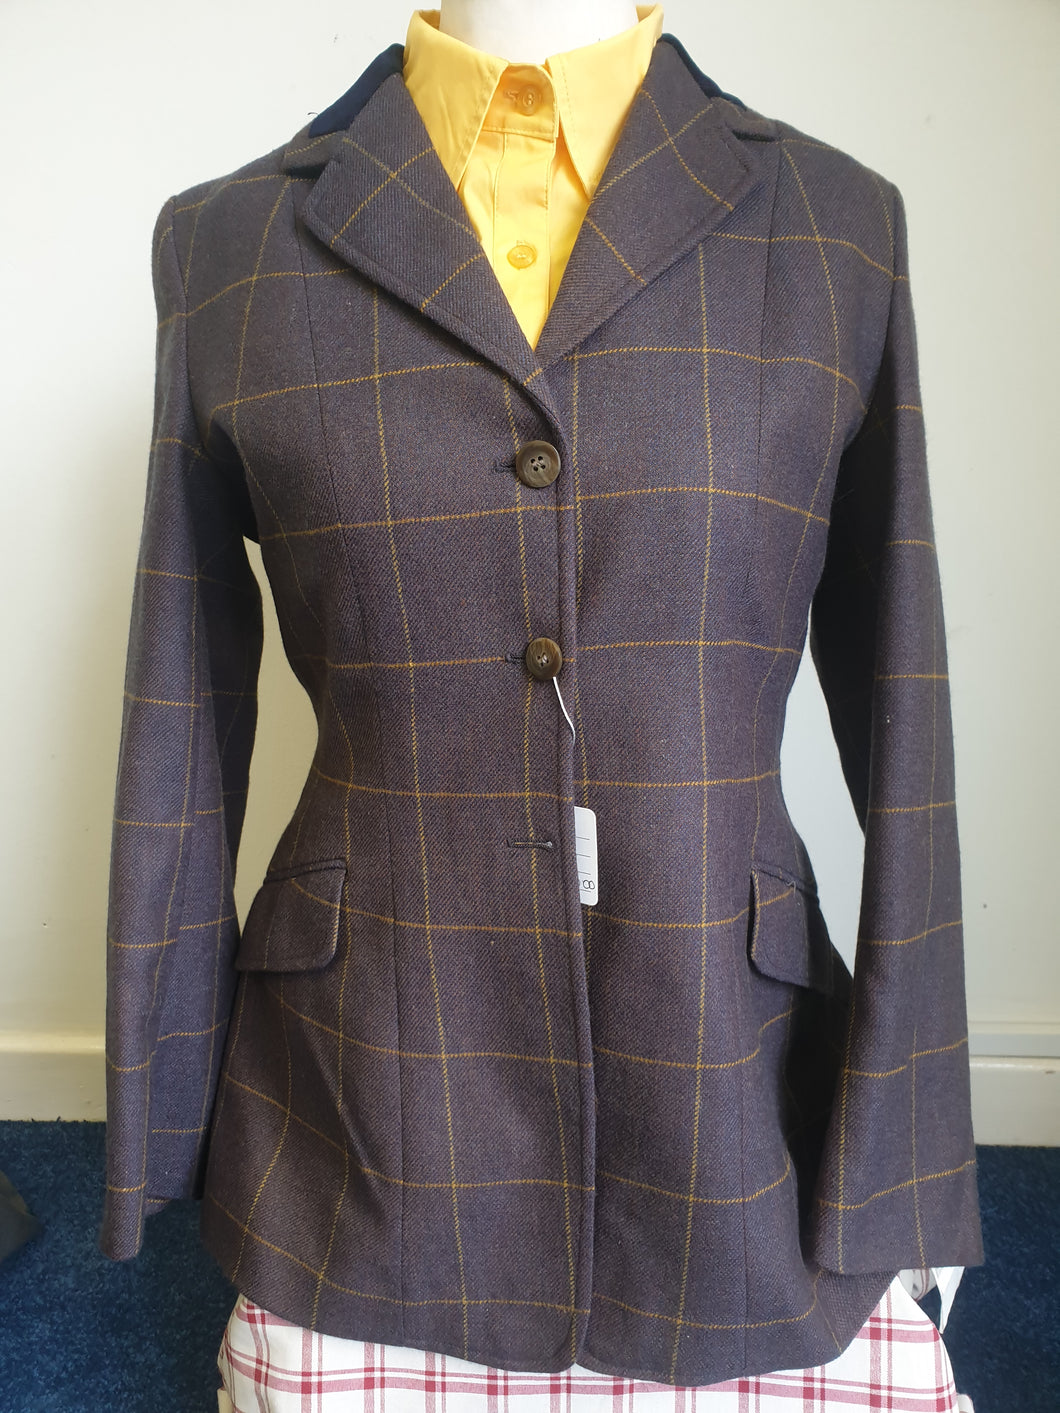 NEW caldene hickstead tweed jacket, size 12 (36